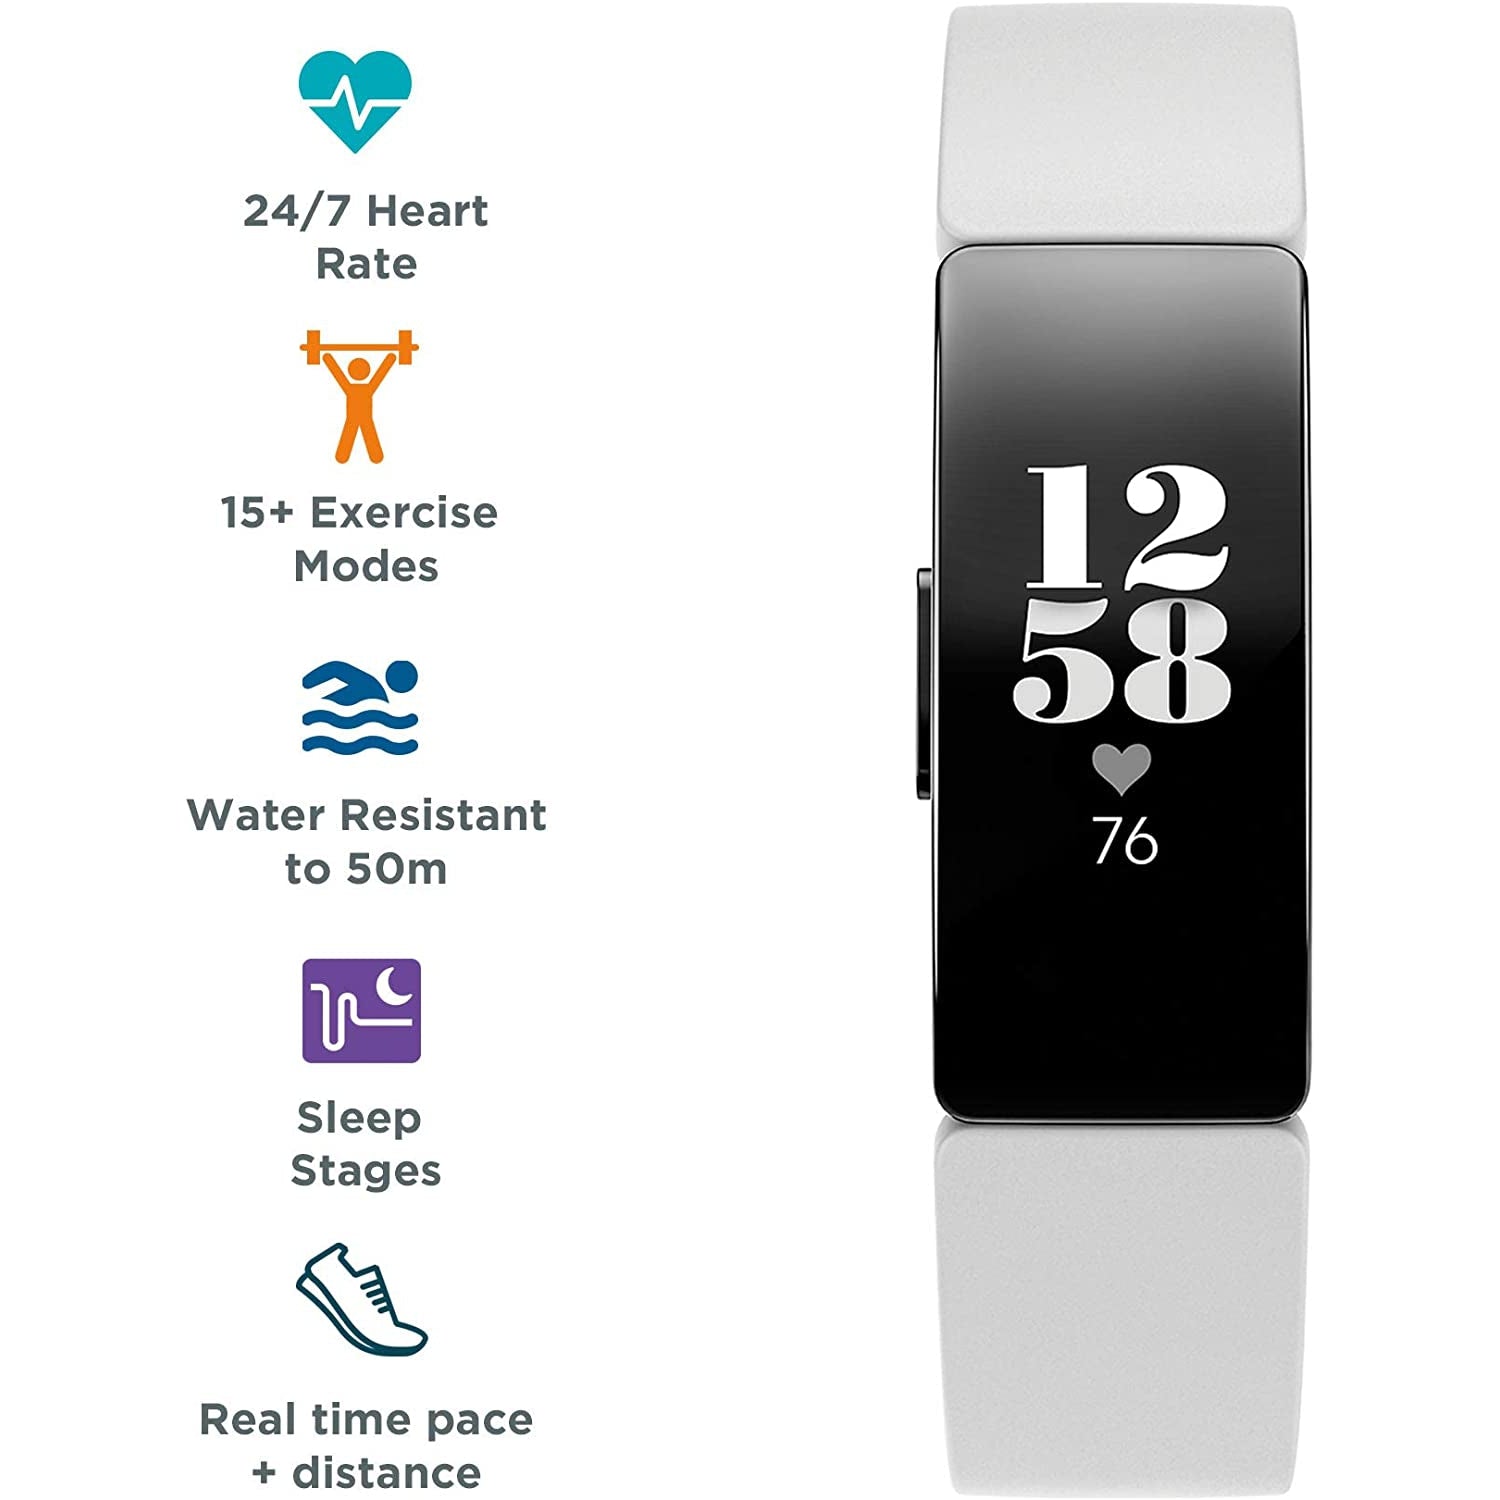 Fitbit Inspire HR Health & Fitness Tracker - White - Refurbished Pristine